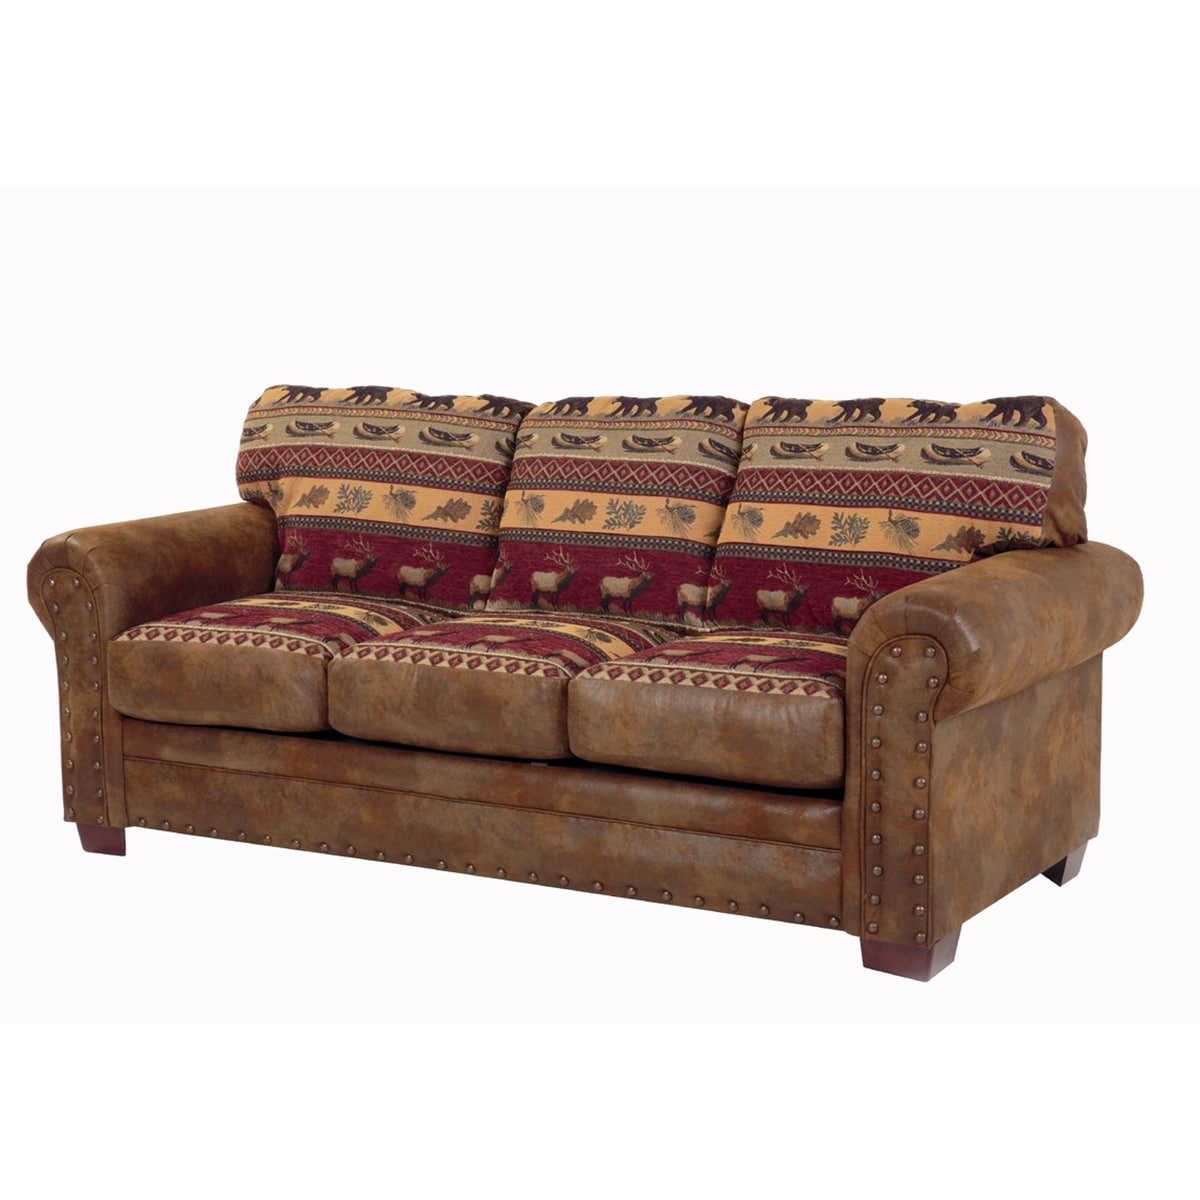 Sierra lodge 88-in Rustic Sierra Lodge Tapestry Microfiber 3-seater Sofa Cotton in Brown | - American Furniture Classics 8503-10